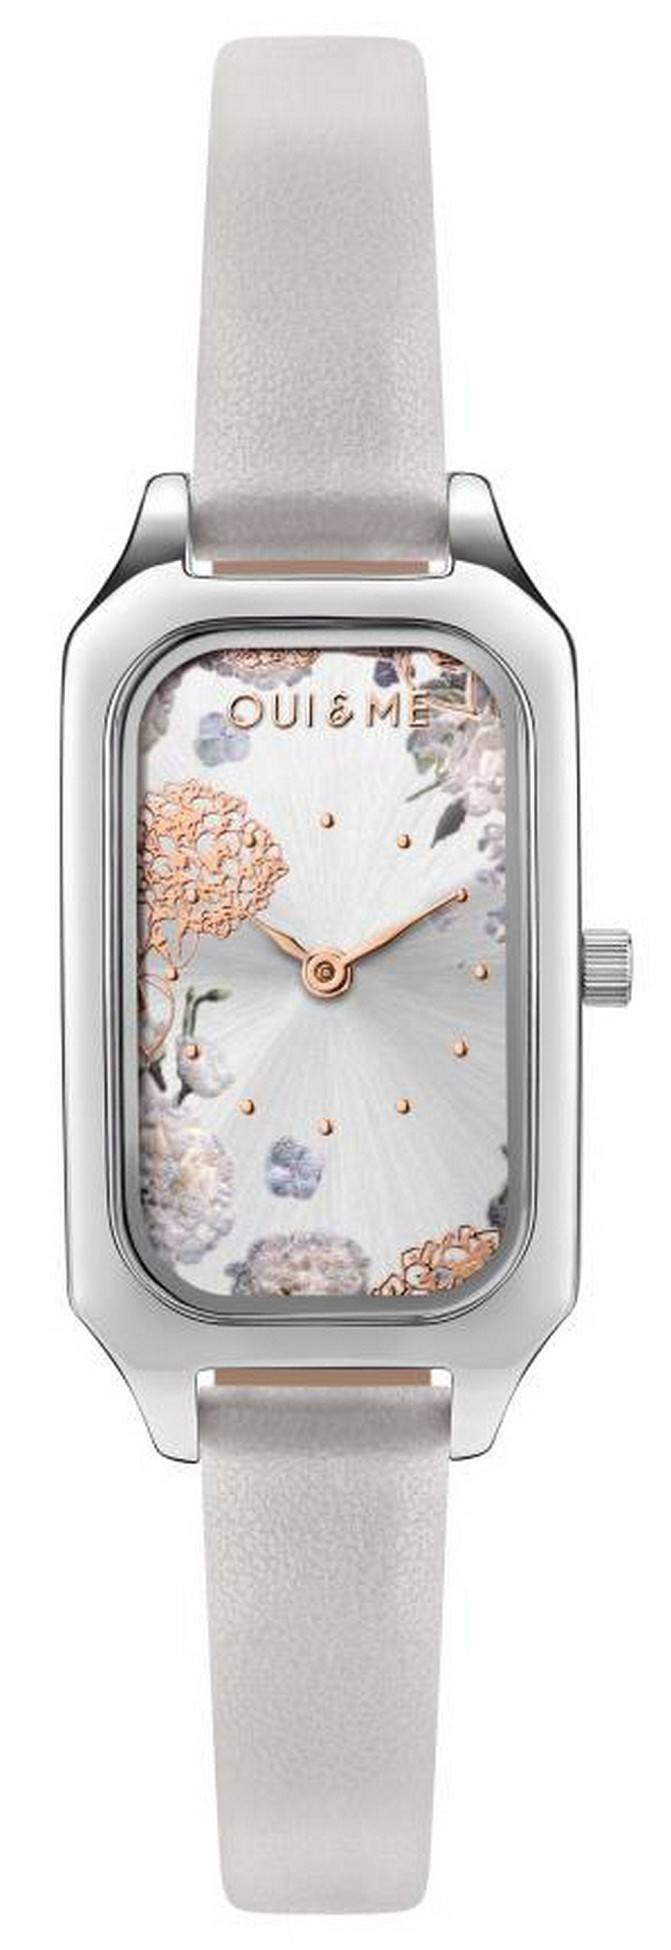 Oui & Me Finette Silver Sunray Dial Leather Strap Quartz ME010121 Women's Watch